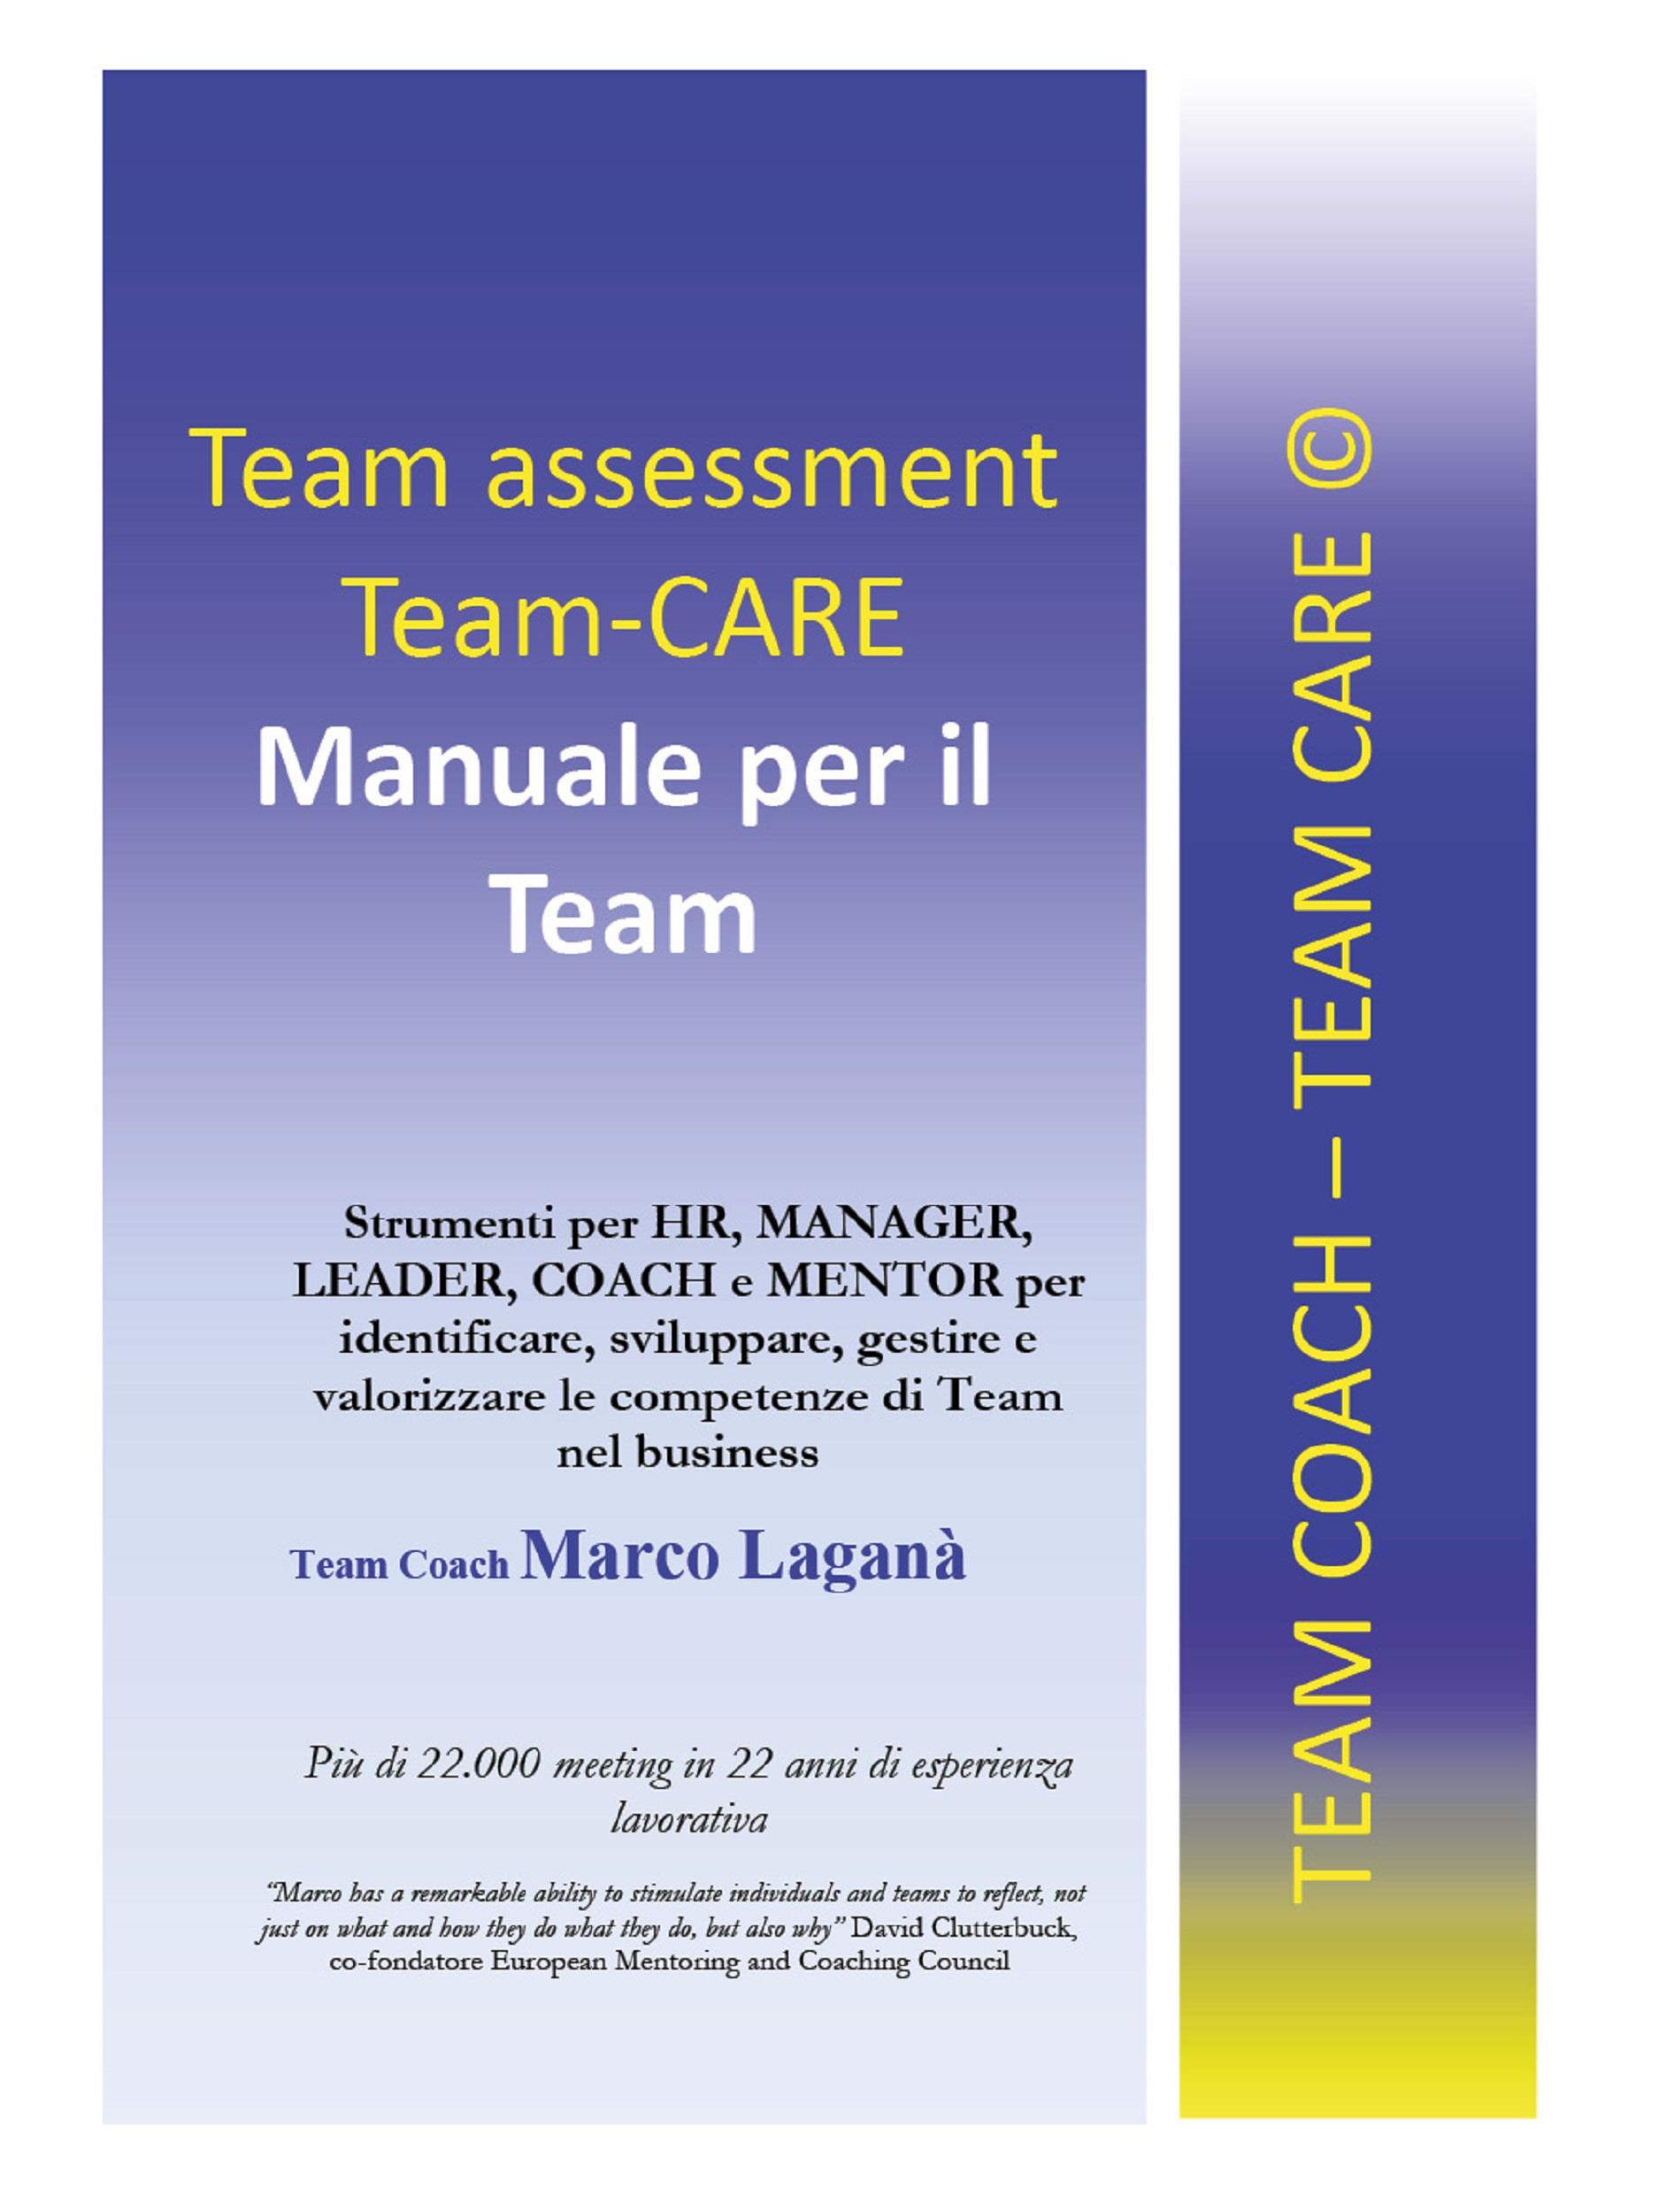 Team Assessment Team-CARE - Manuale per il Team